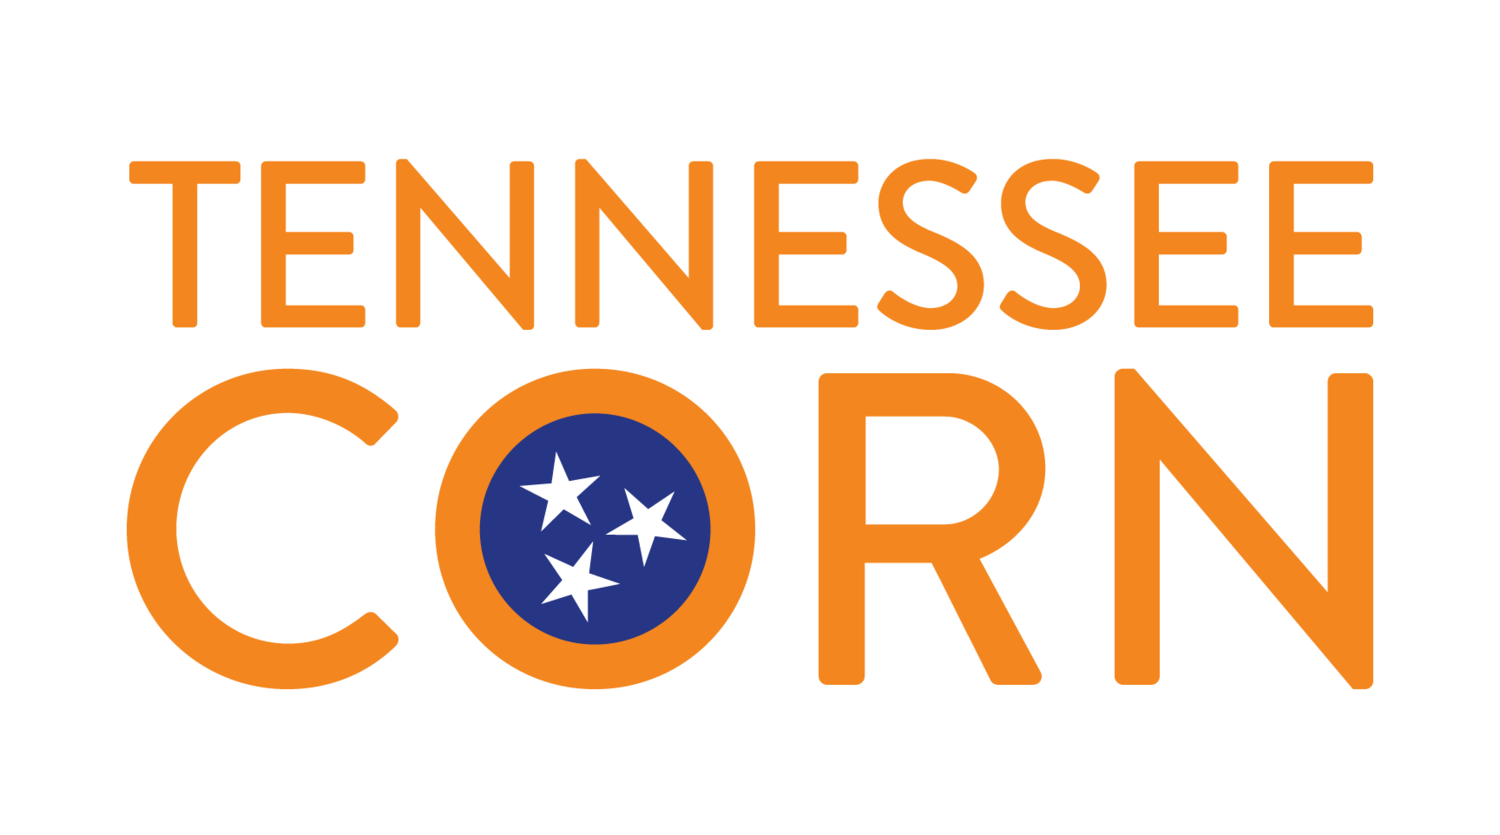 Tennessee Corn